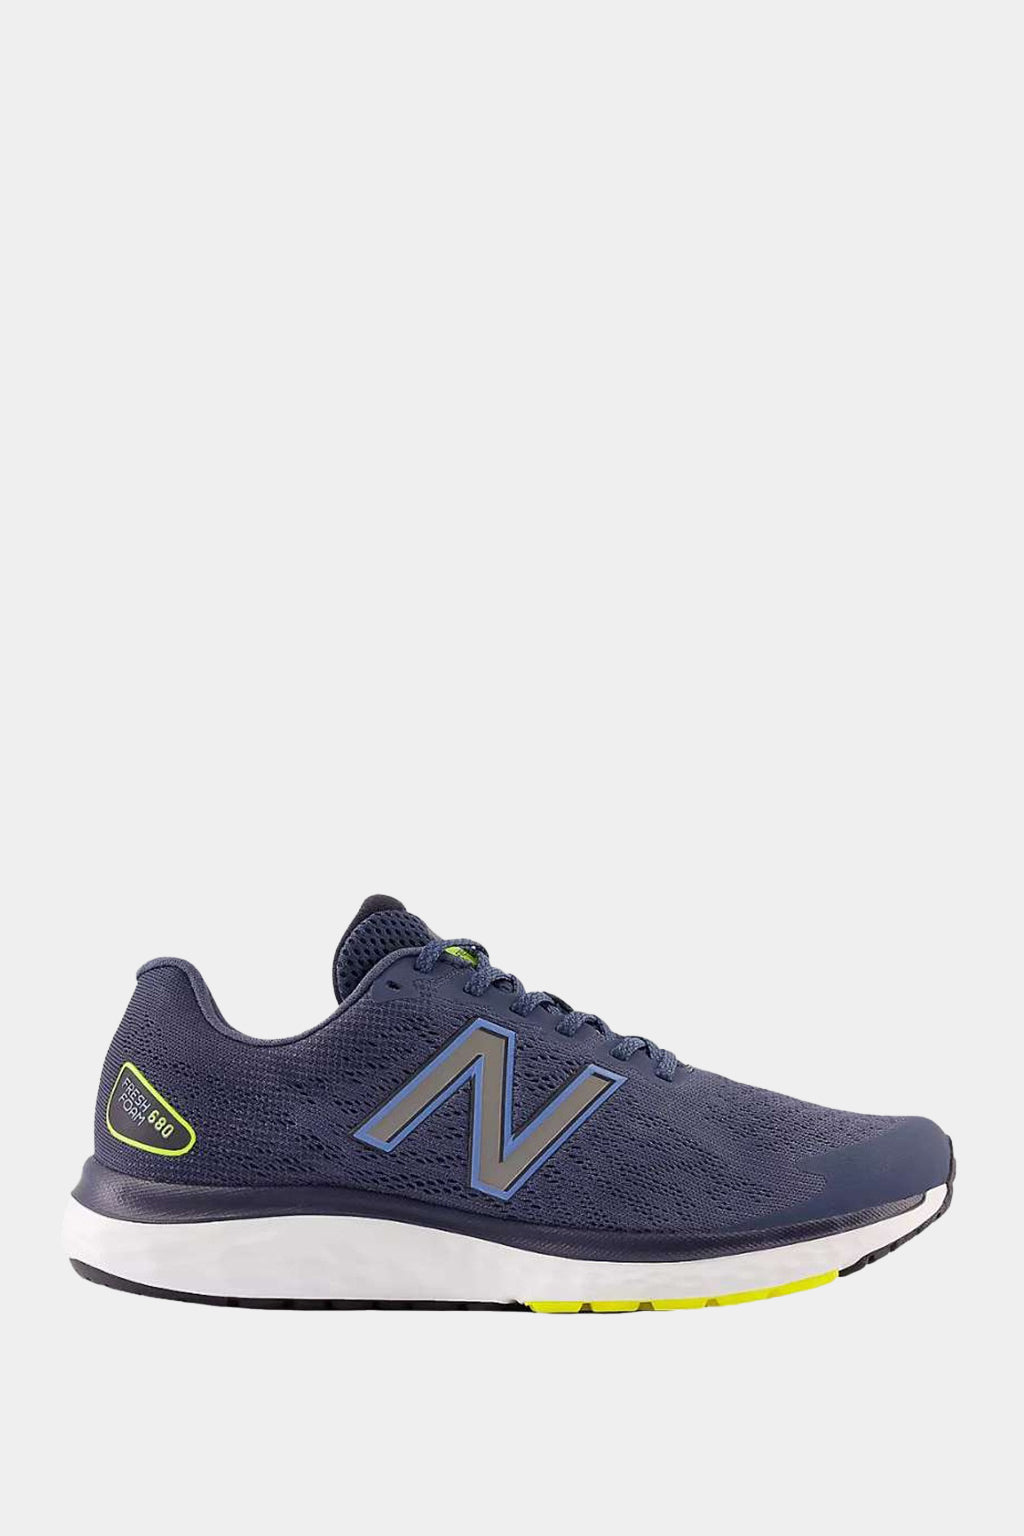 New Balance - Running Shoes